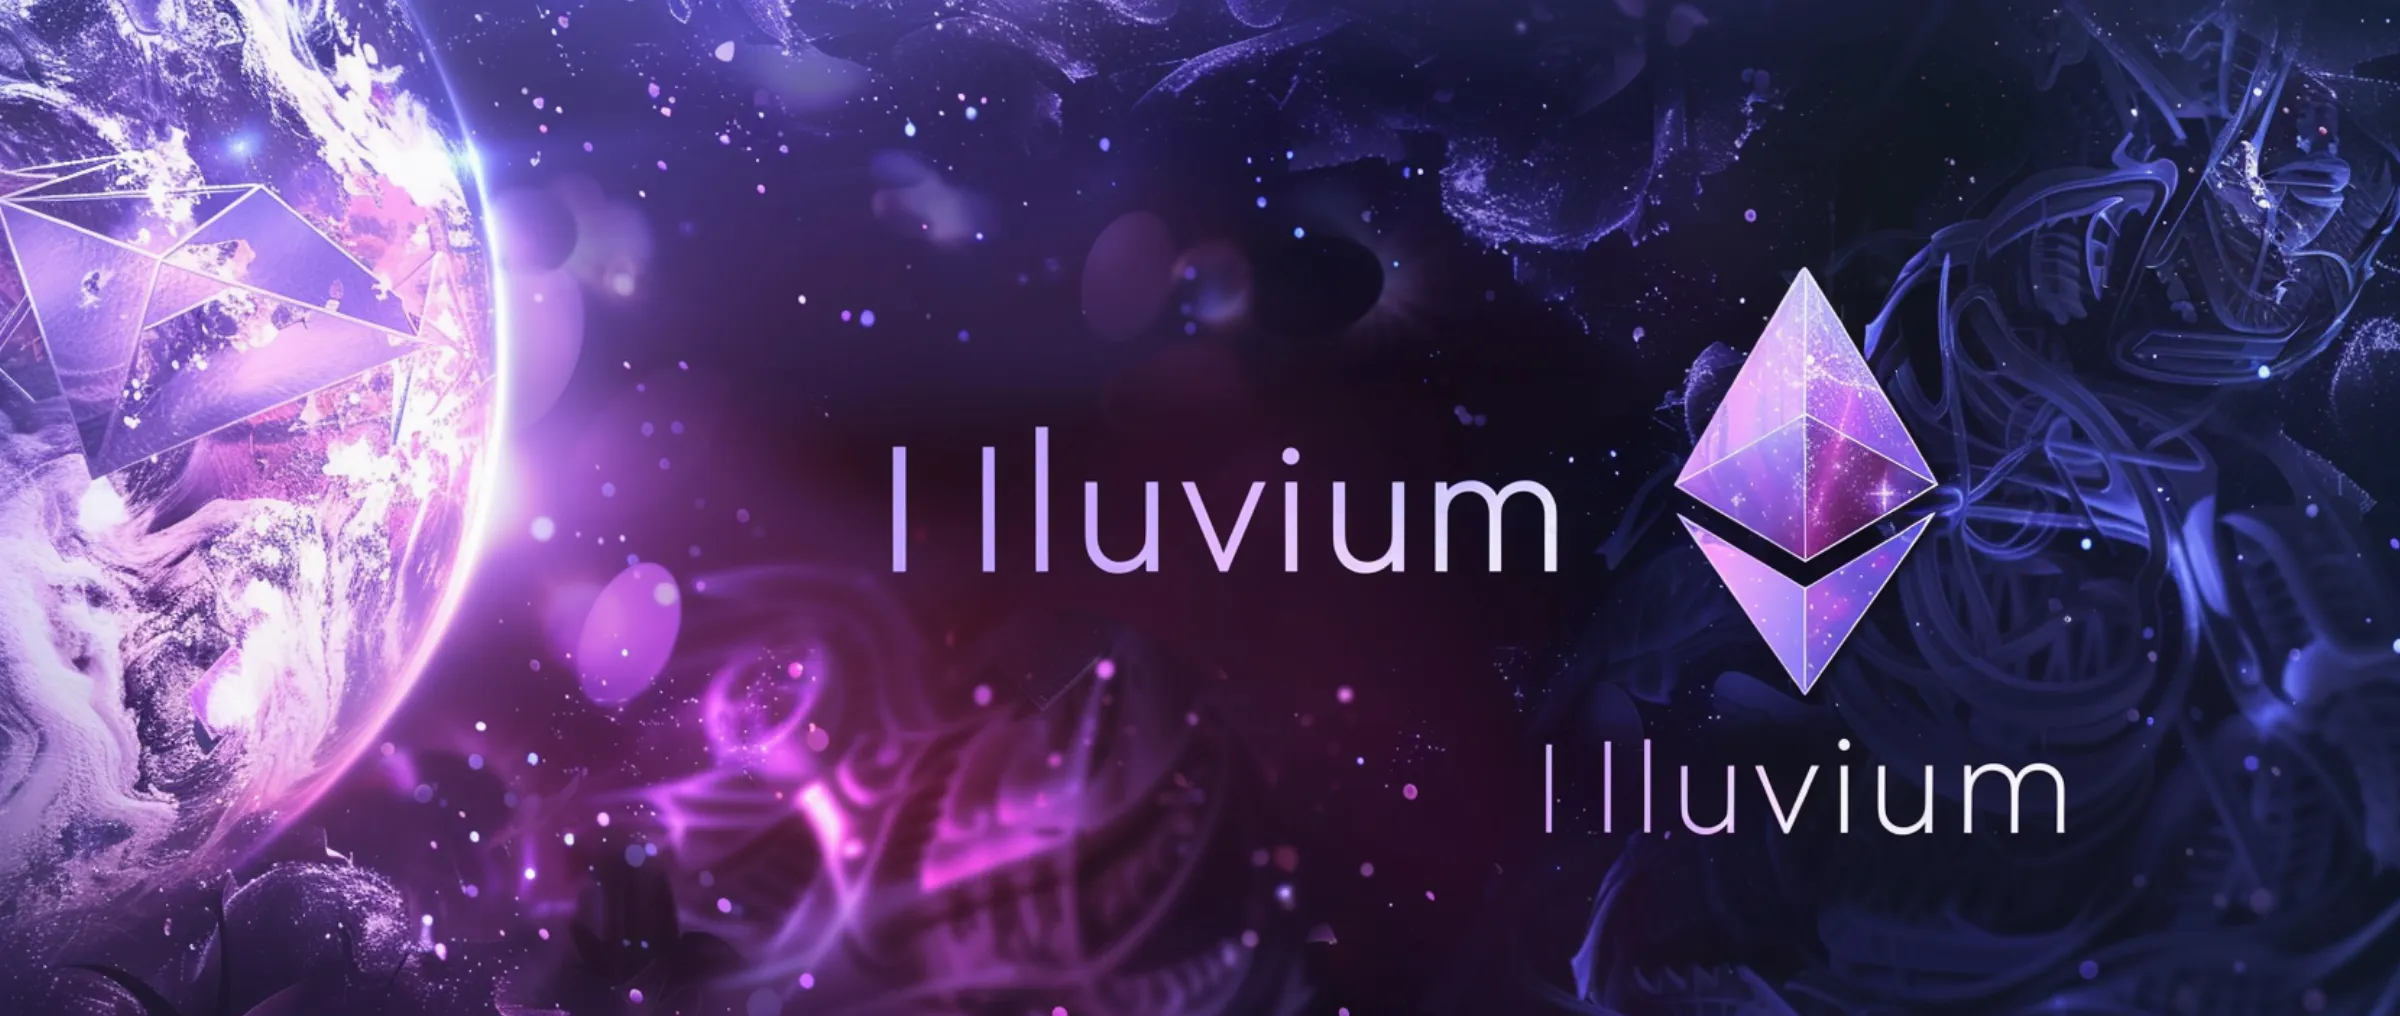 Illuvium Labs raises $12 million in investment